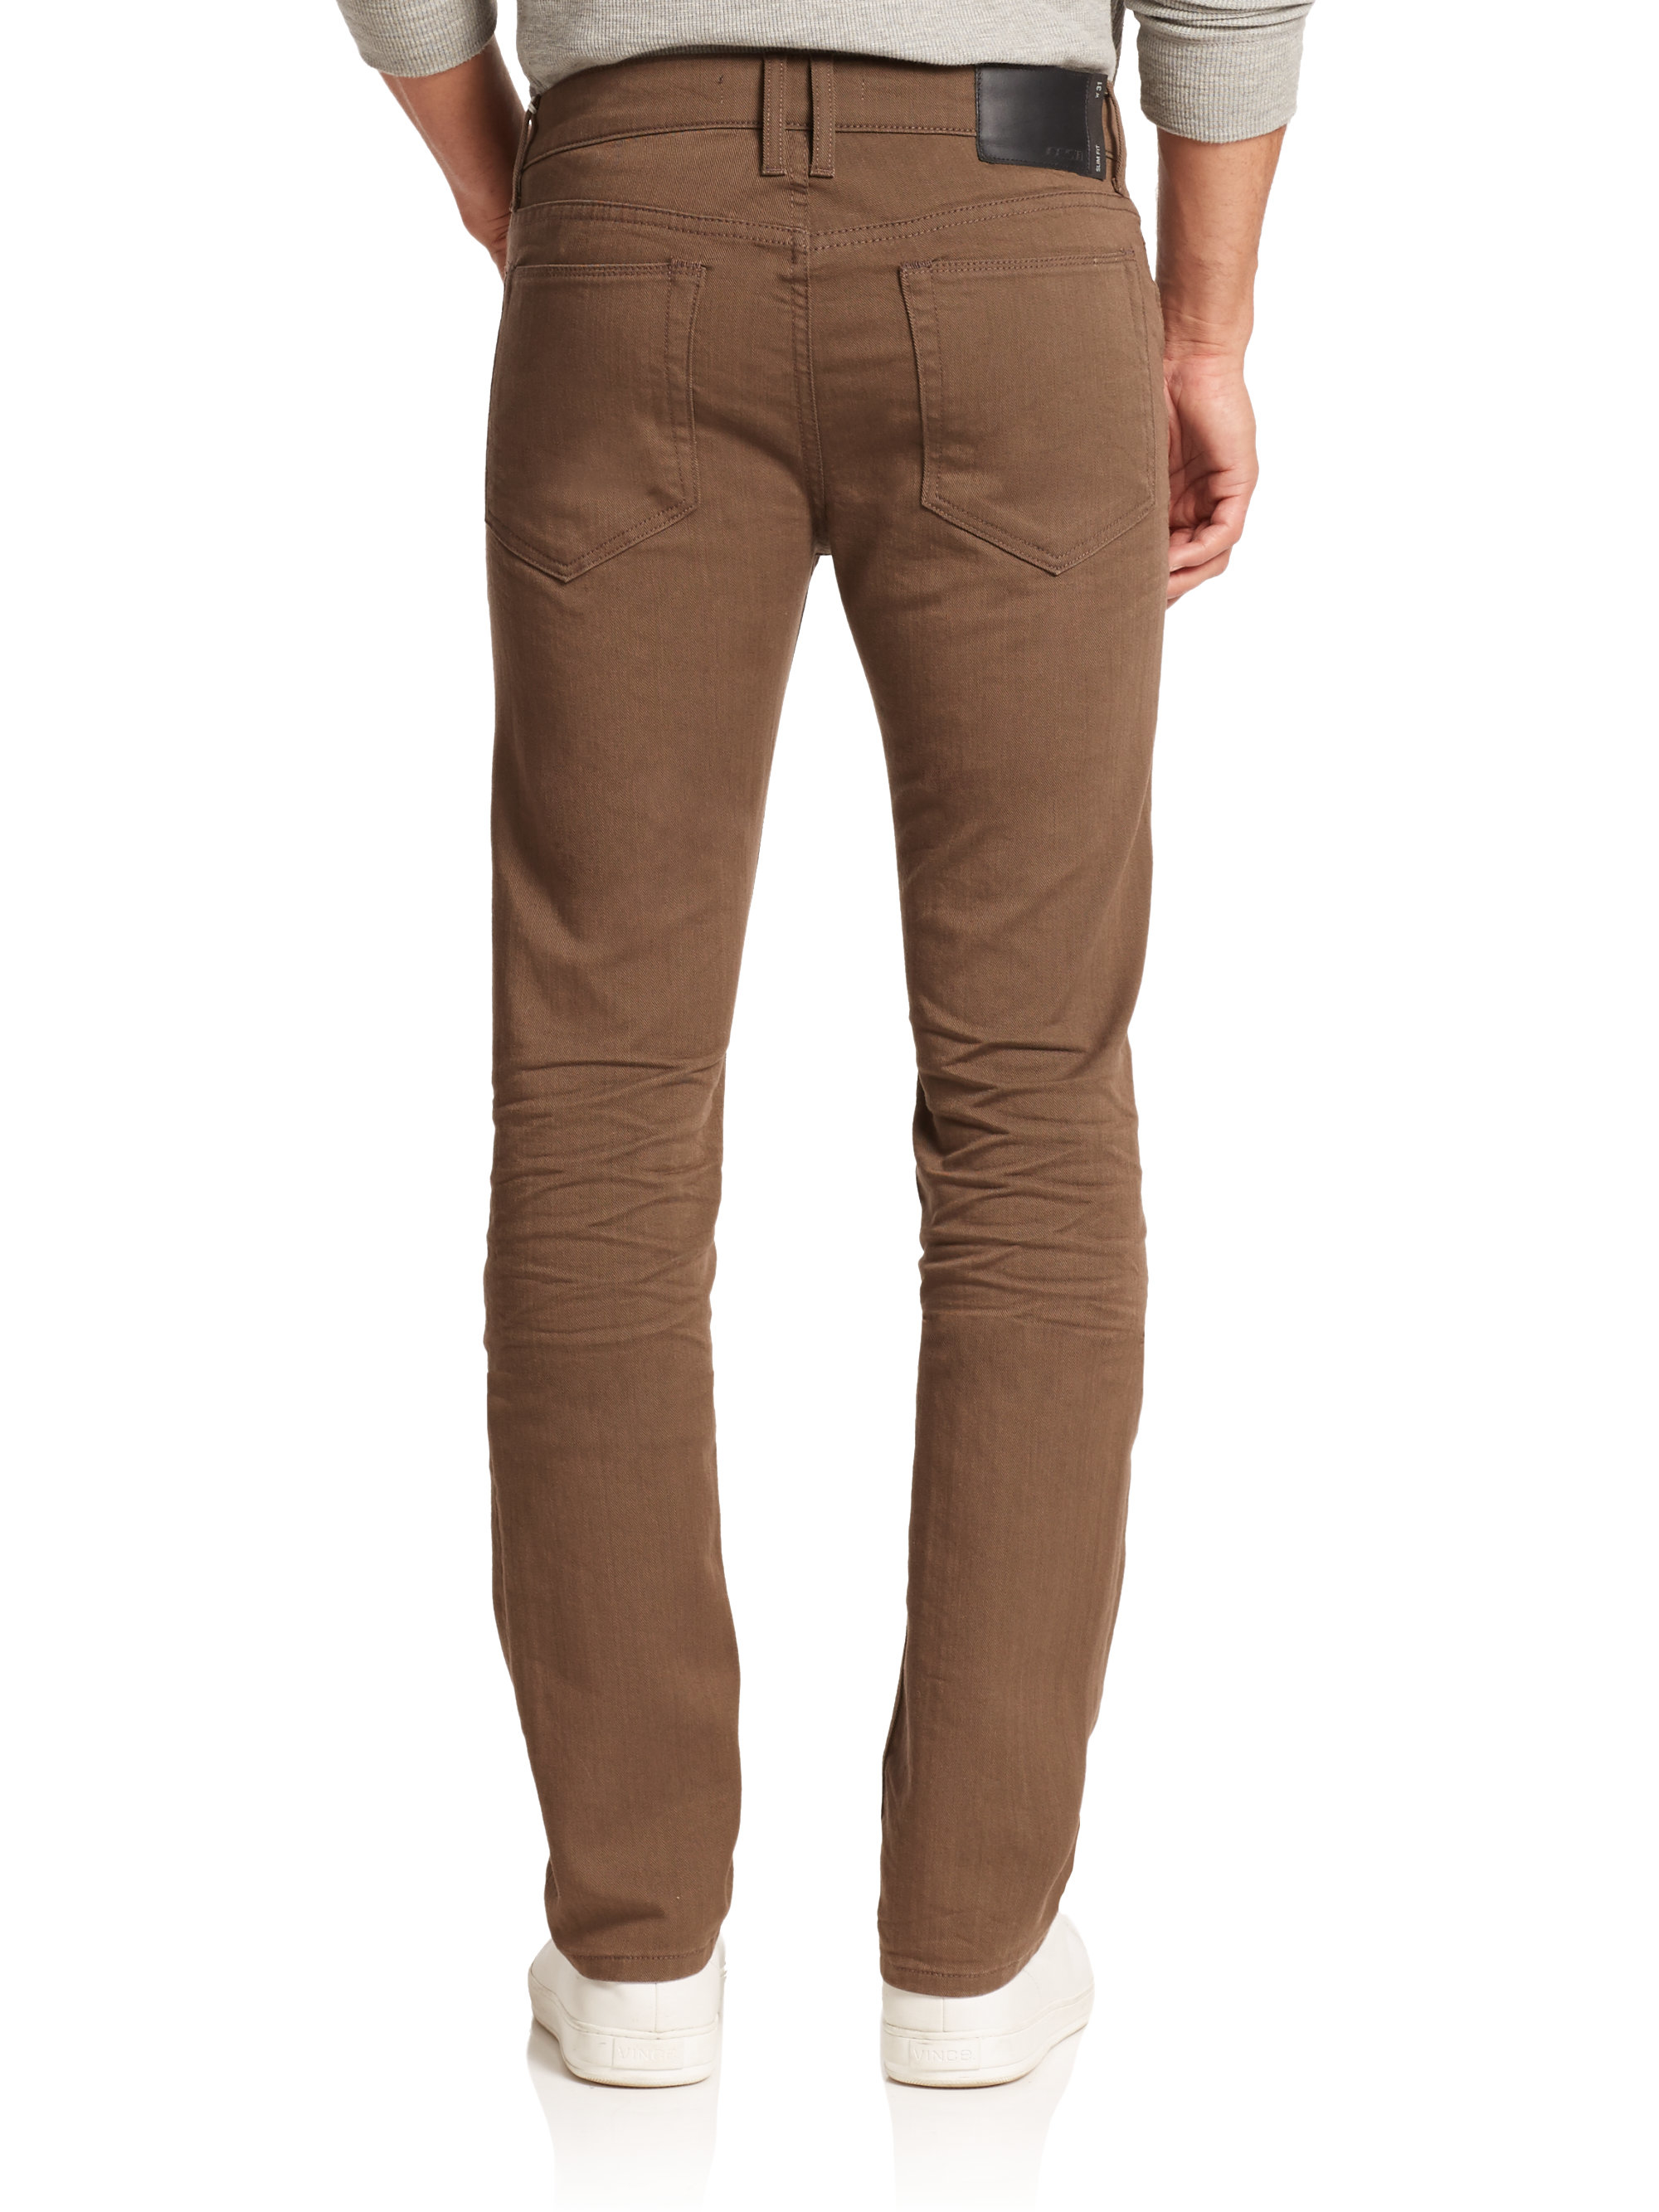 Joe's Jeans Denim Slim-fit Jeans in Brown for Men - Lyst